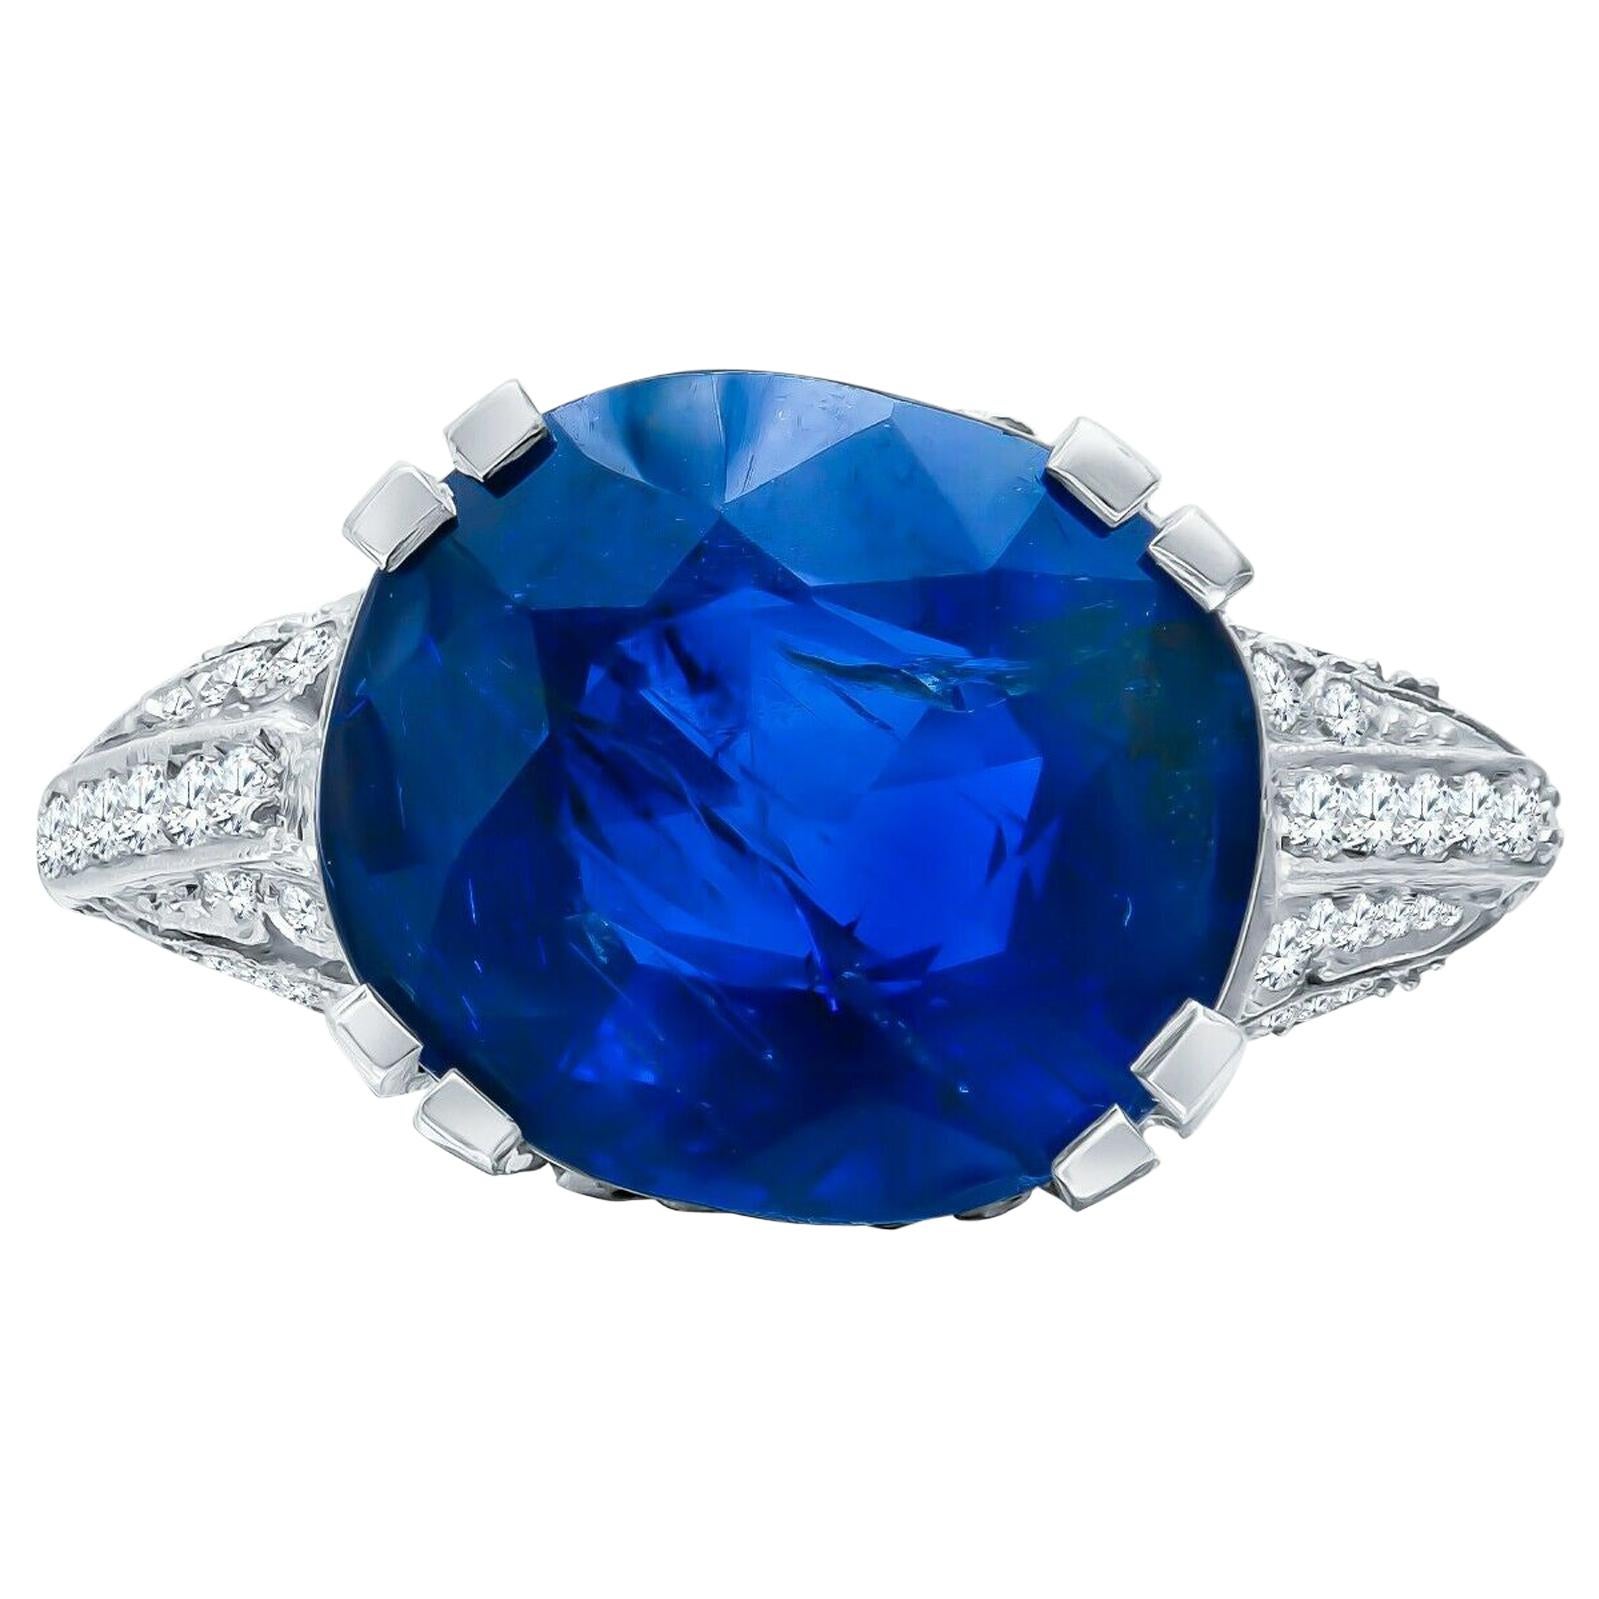 Estate Antique Art Deco GIA Certified 11.91 Carat Burma Sapphire Diamond Ring For Sale